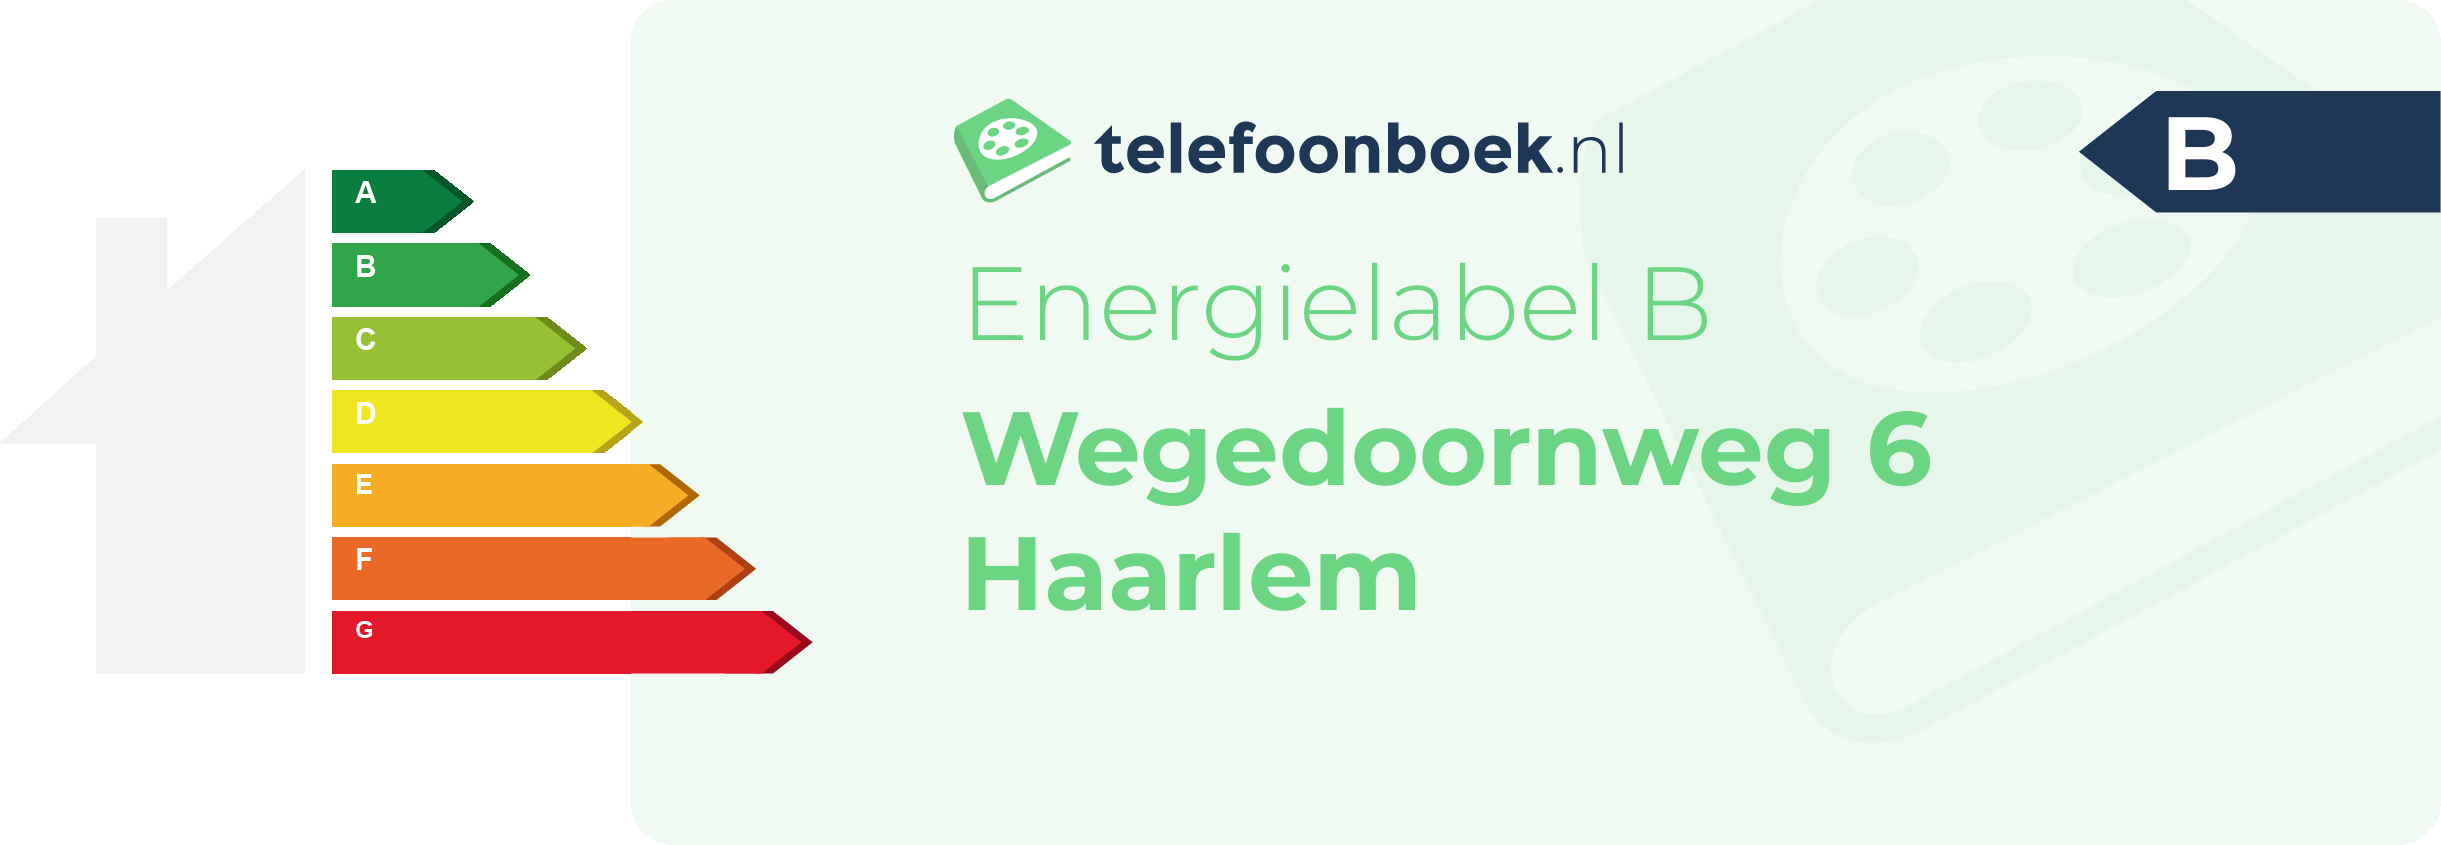 Energielabel Wegedoornweg 6 Haarlem